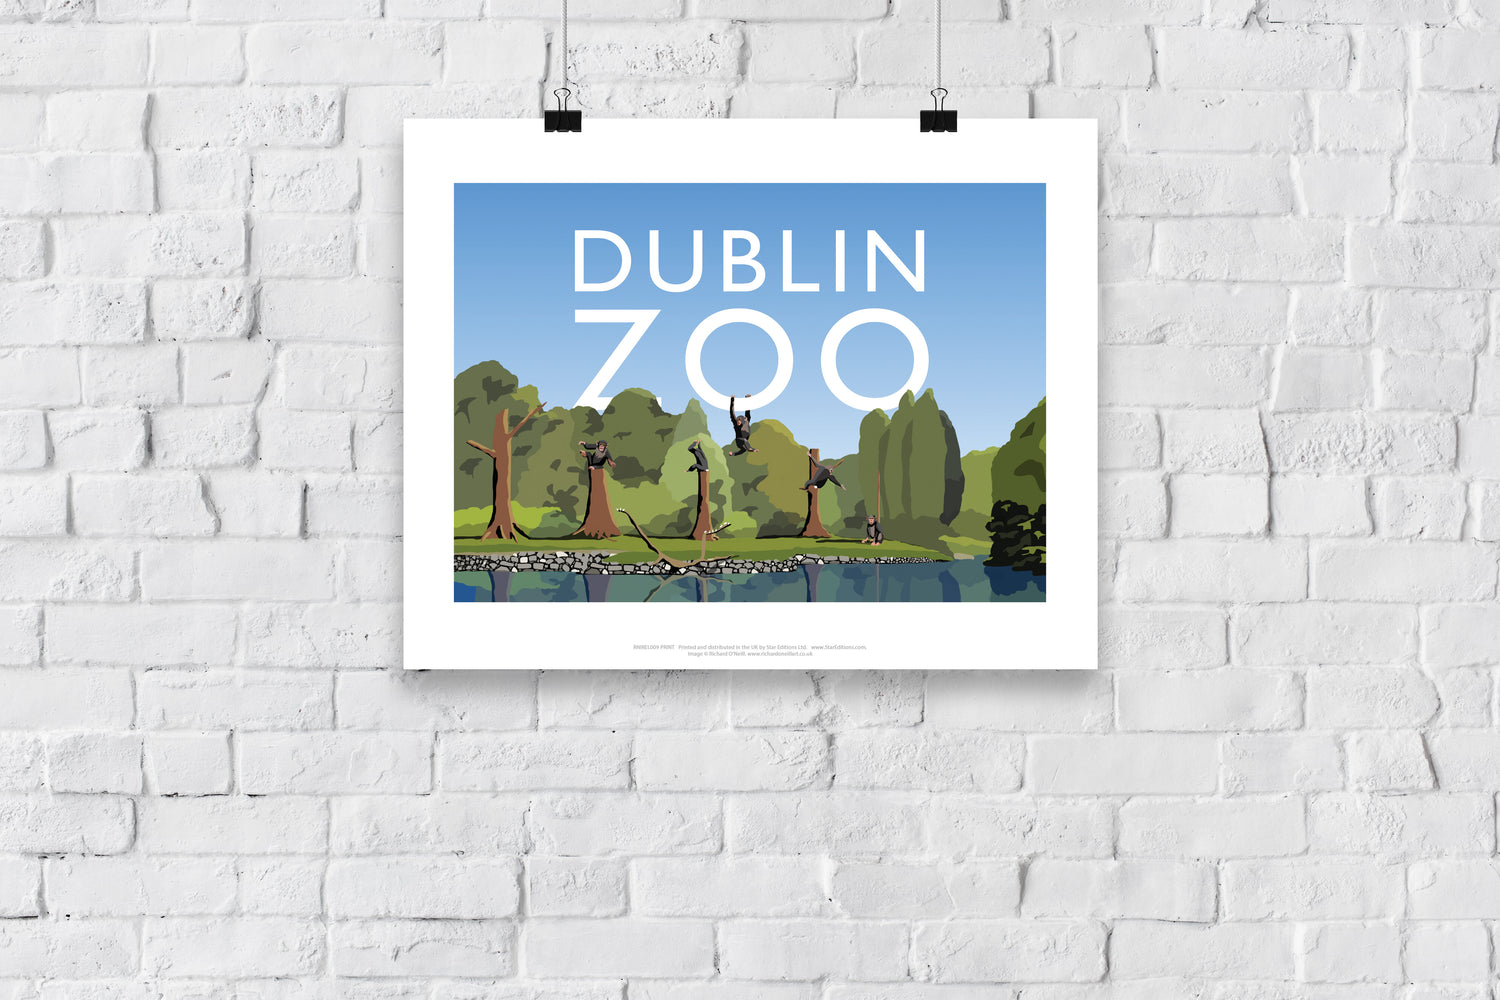 Dublin Zoo, Ireland - Art Print